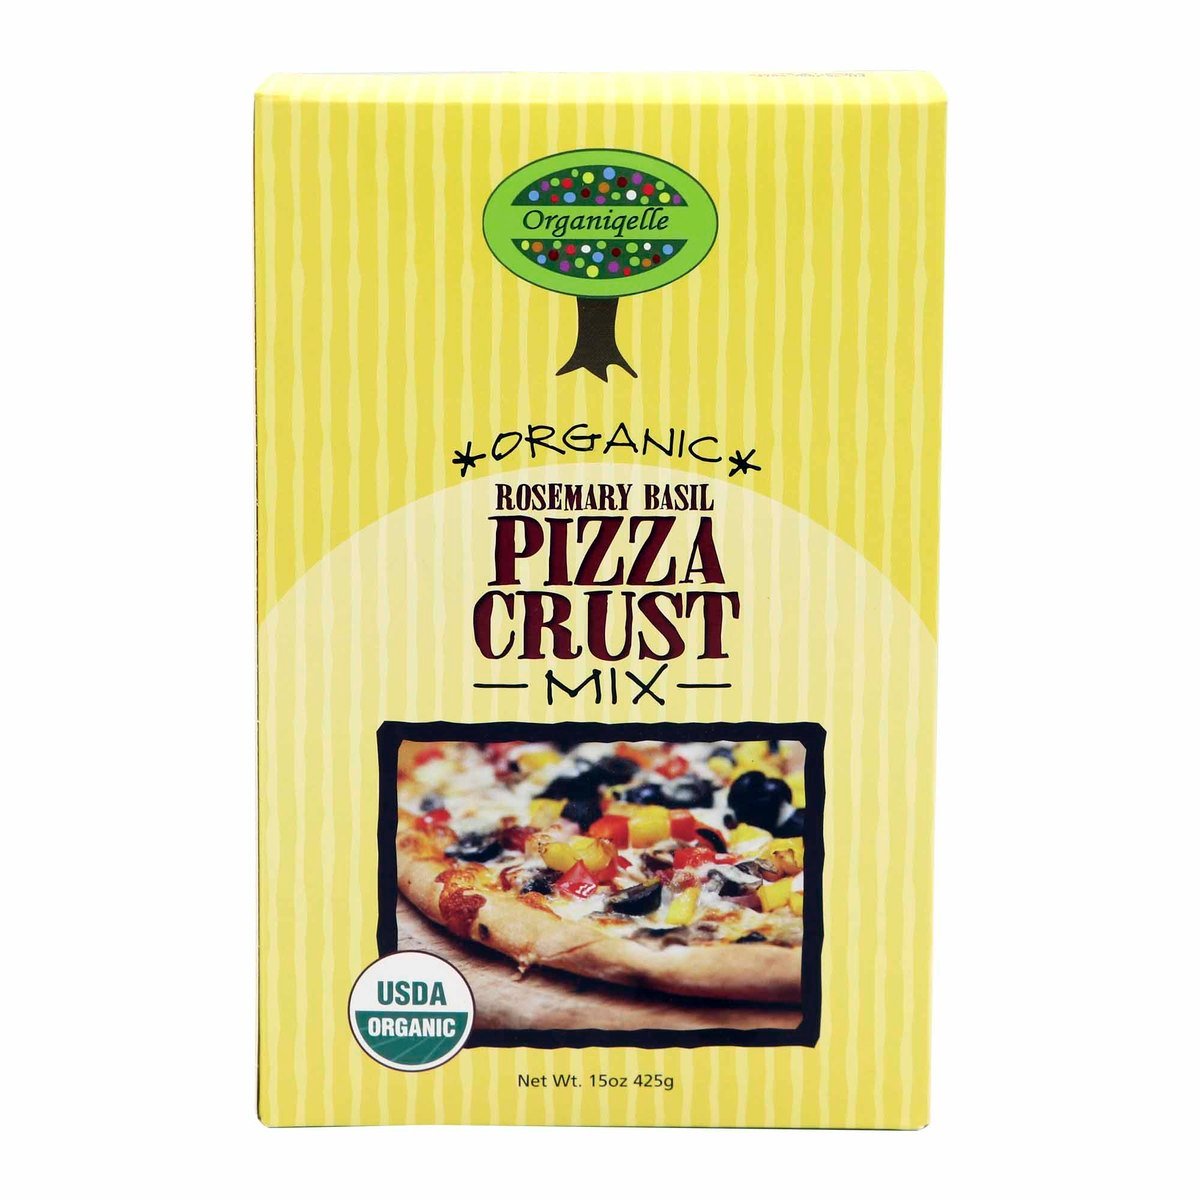 Organiqelle Rosemary Basil Pizza Crust Mix 425g